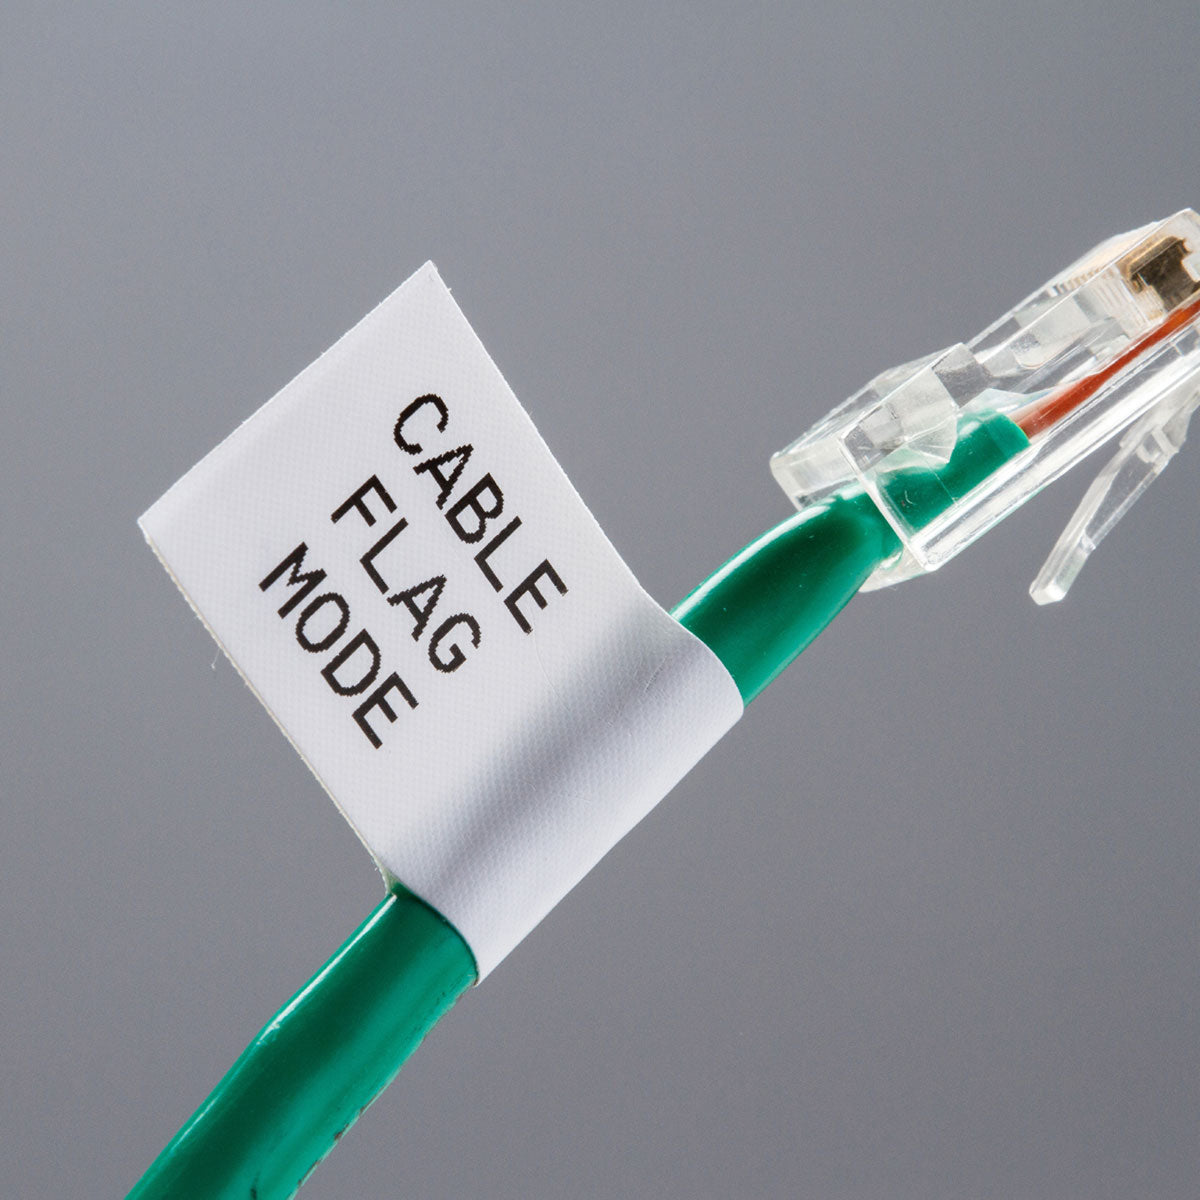 Cartucho de etiquetas continua para marcar cables, nylon